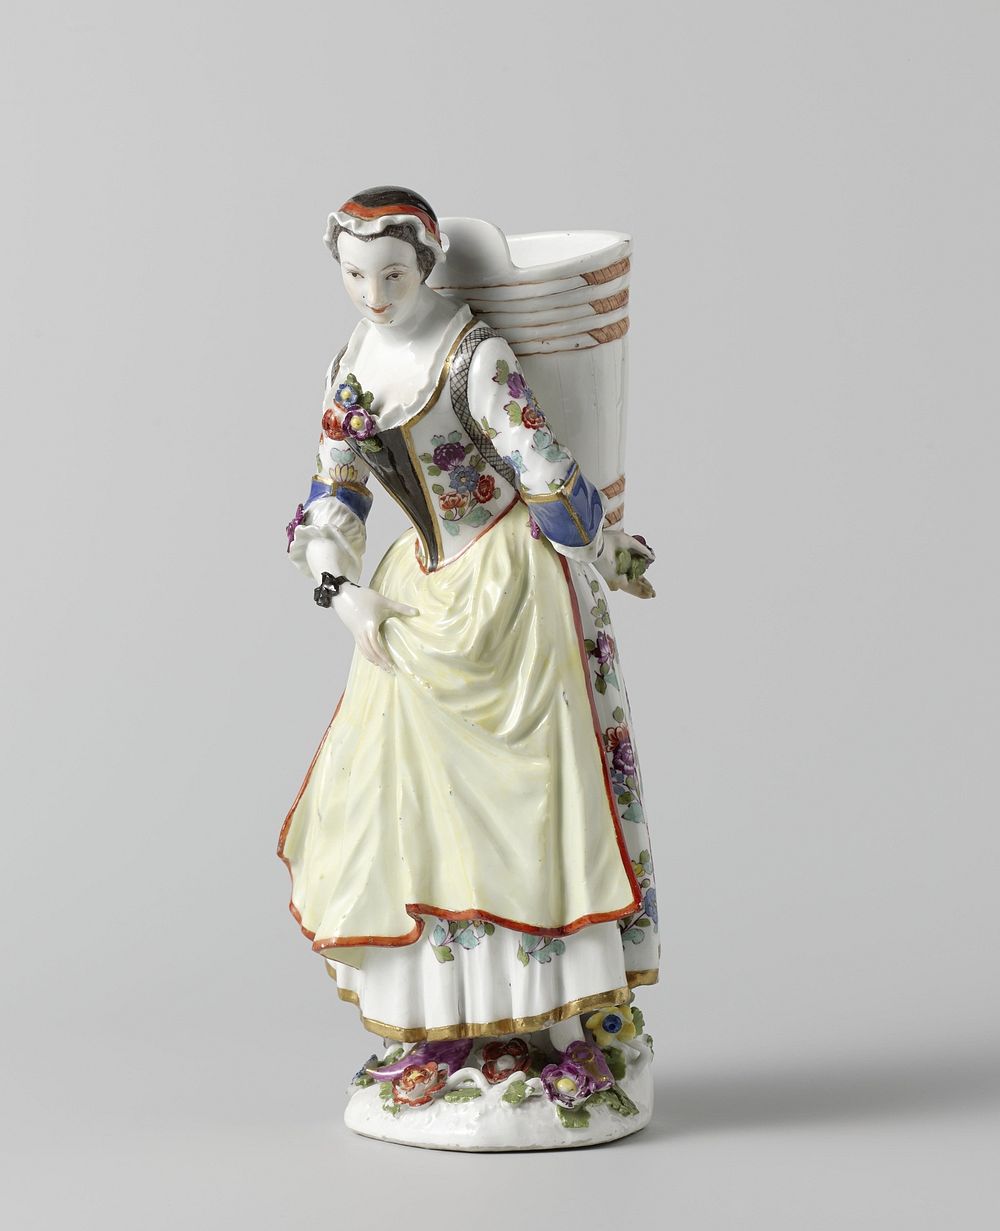 Vrouw met een mand op haar rug (c. 1740 - c. 1744) by Meissener Porzellan Manufaktur and Johann Joachim Kändler